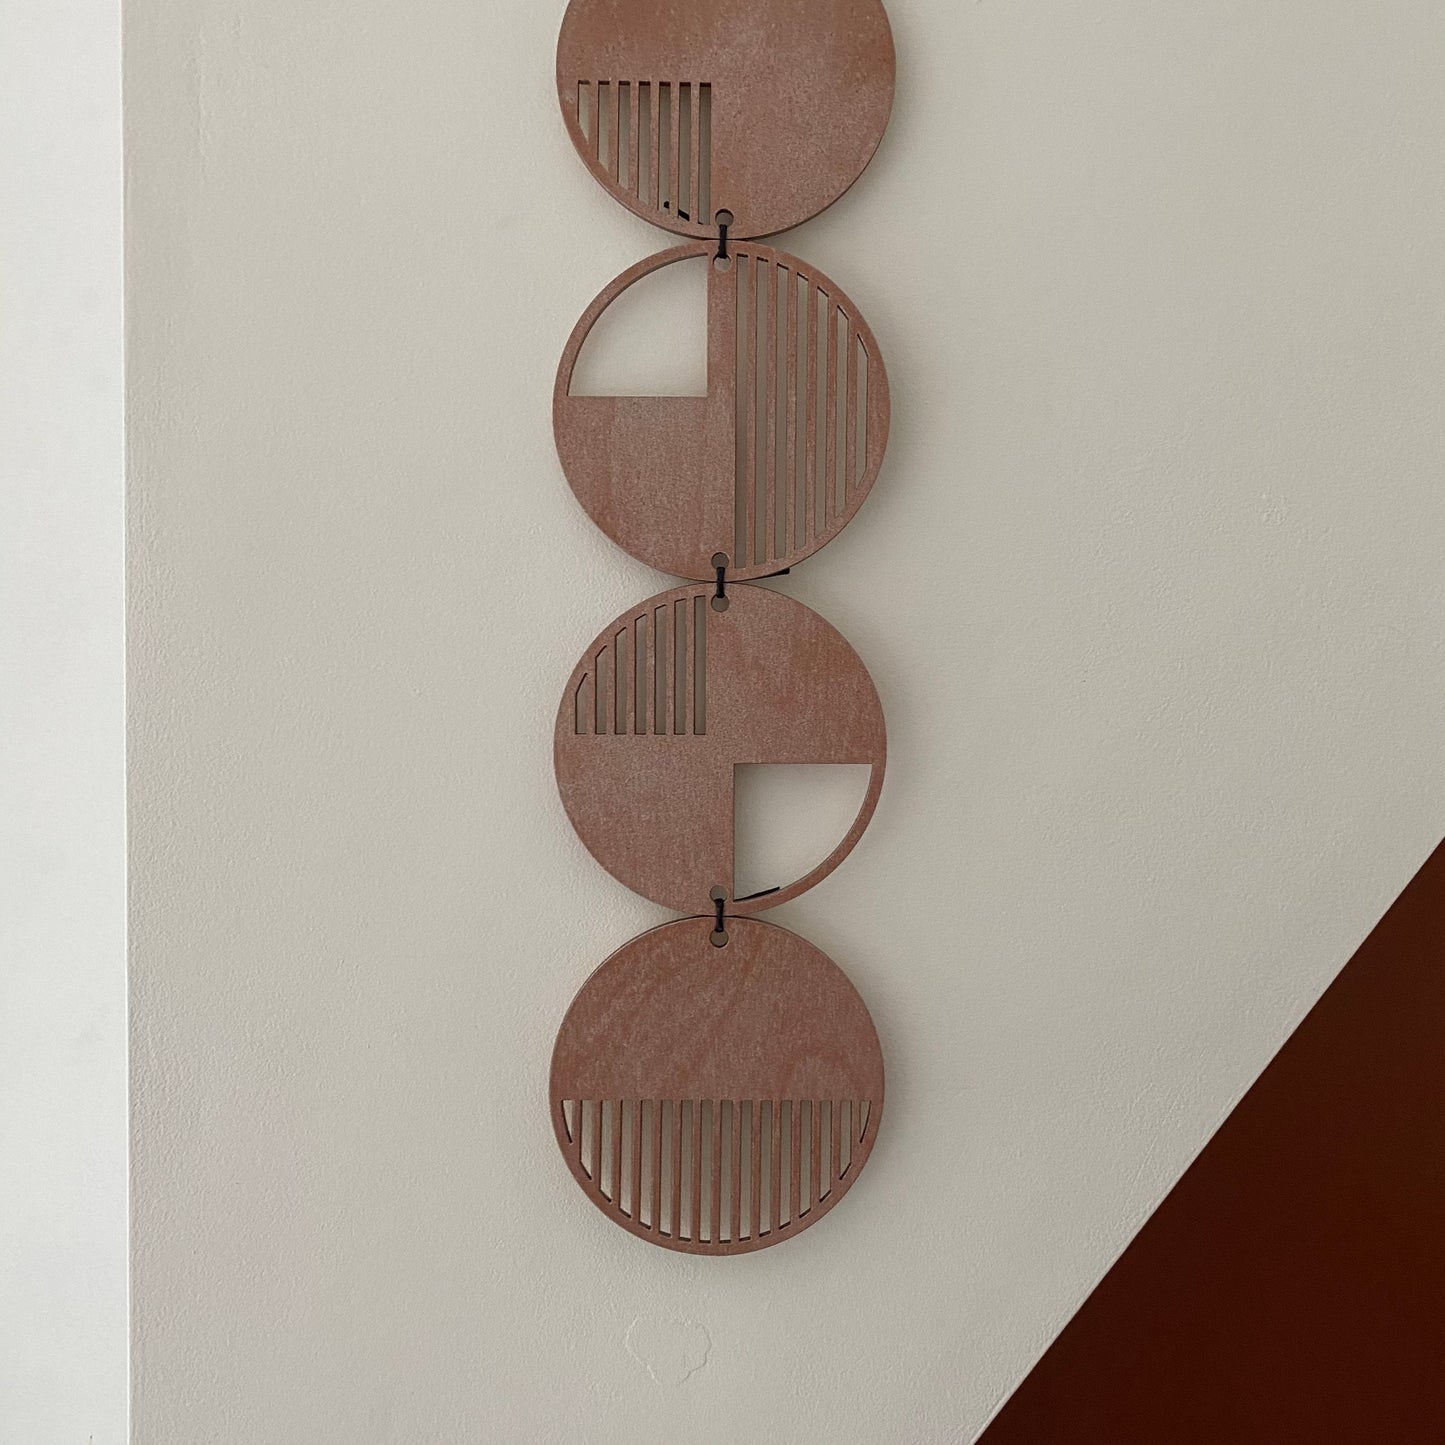 Copper Stripe Wall hanging - Geometric Art - Plywood Decor - Metallic Art - Copper Wall Hanging - Wall Art Decor - Copper Cut Out Art